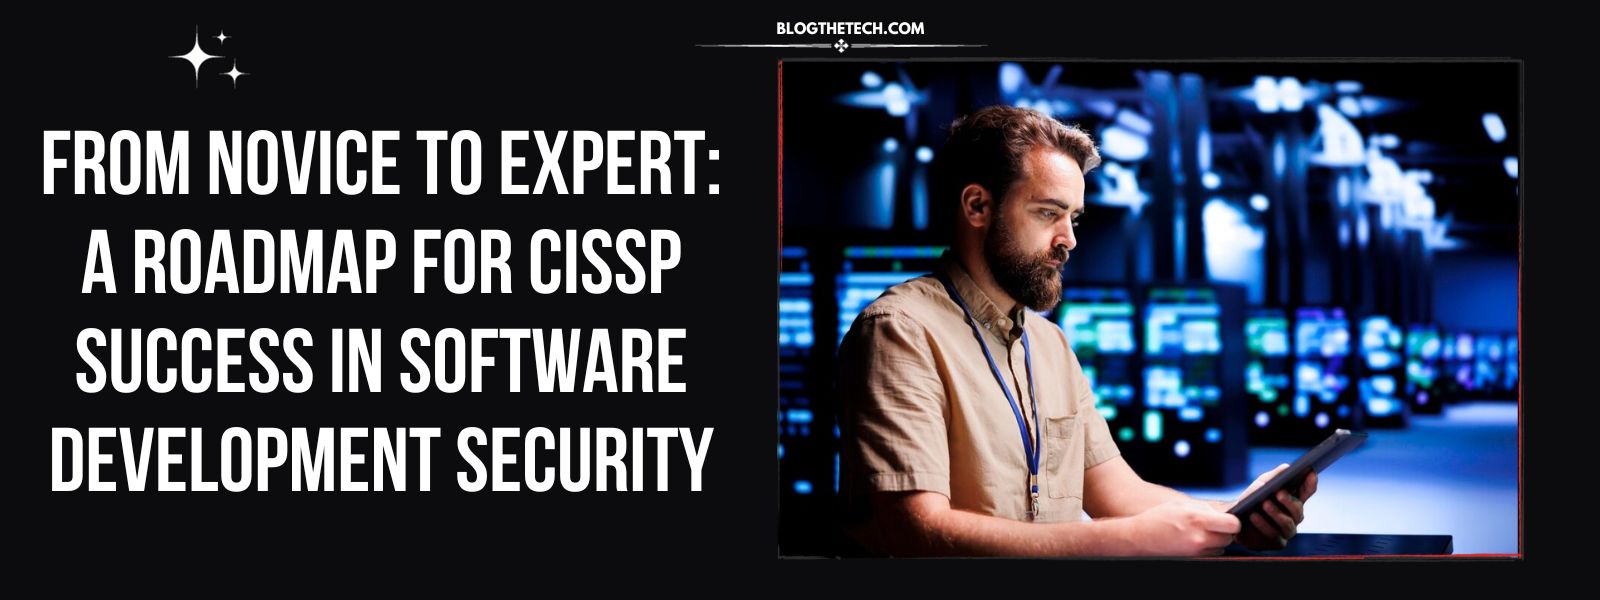 A Roadmap for CISSP Success in Software Development Security